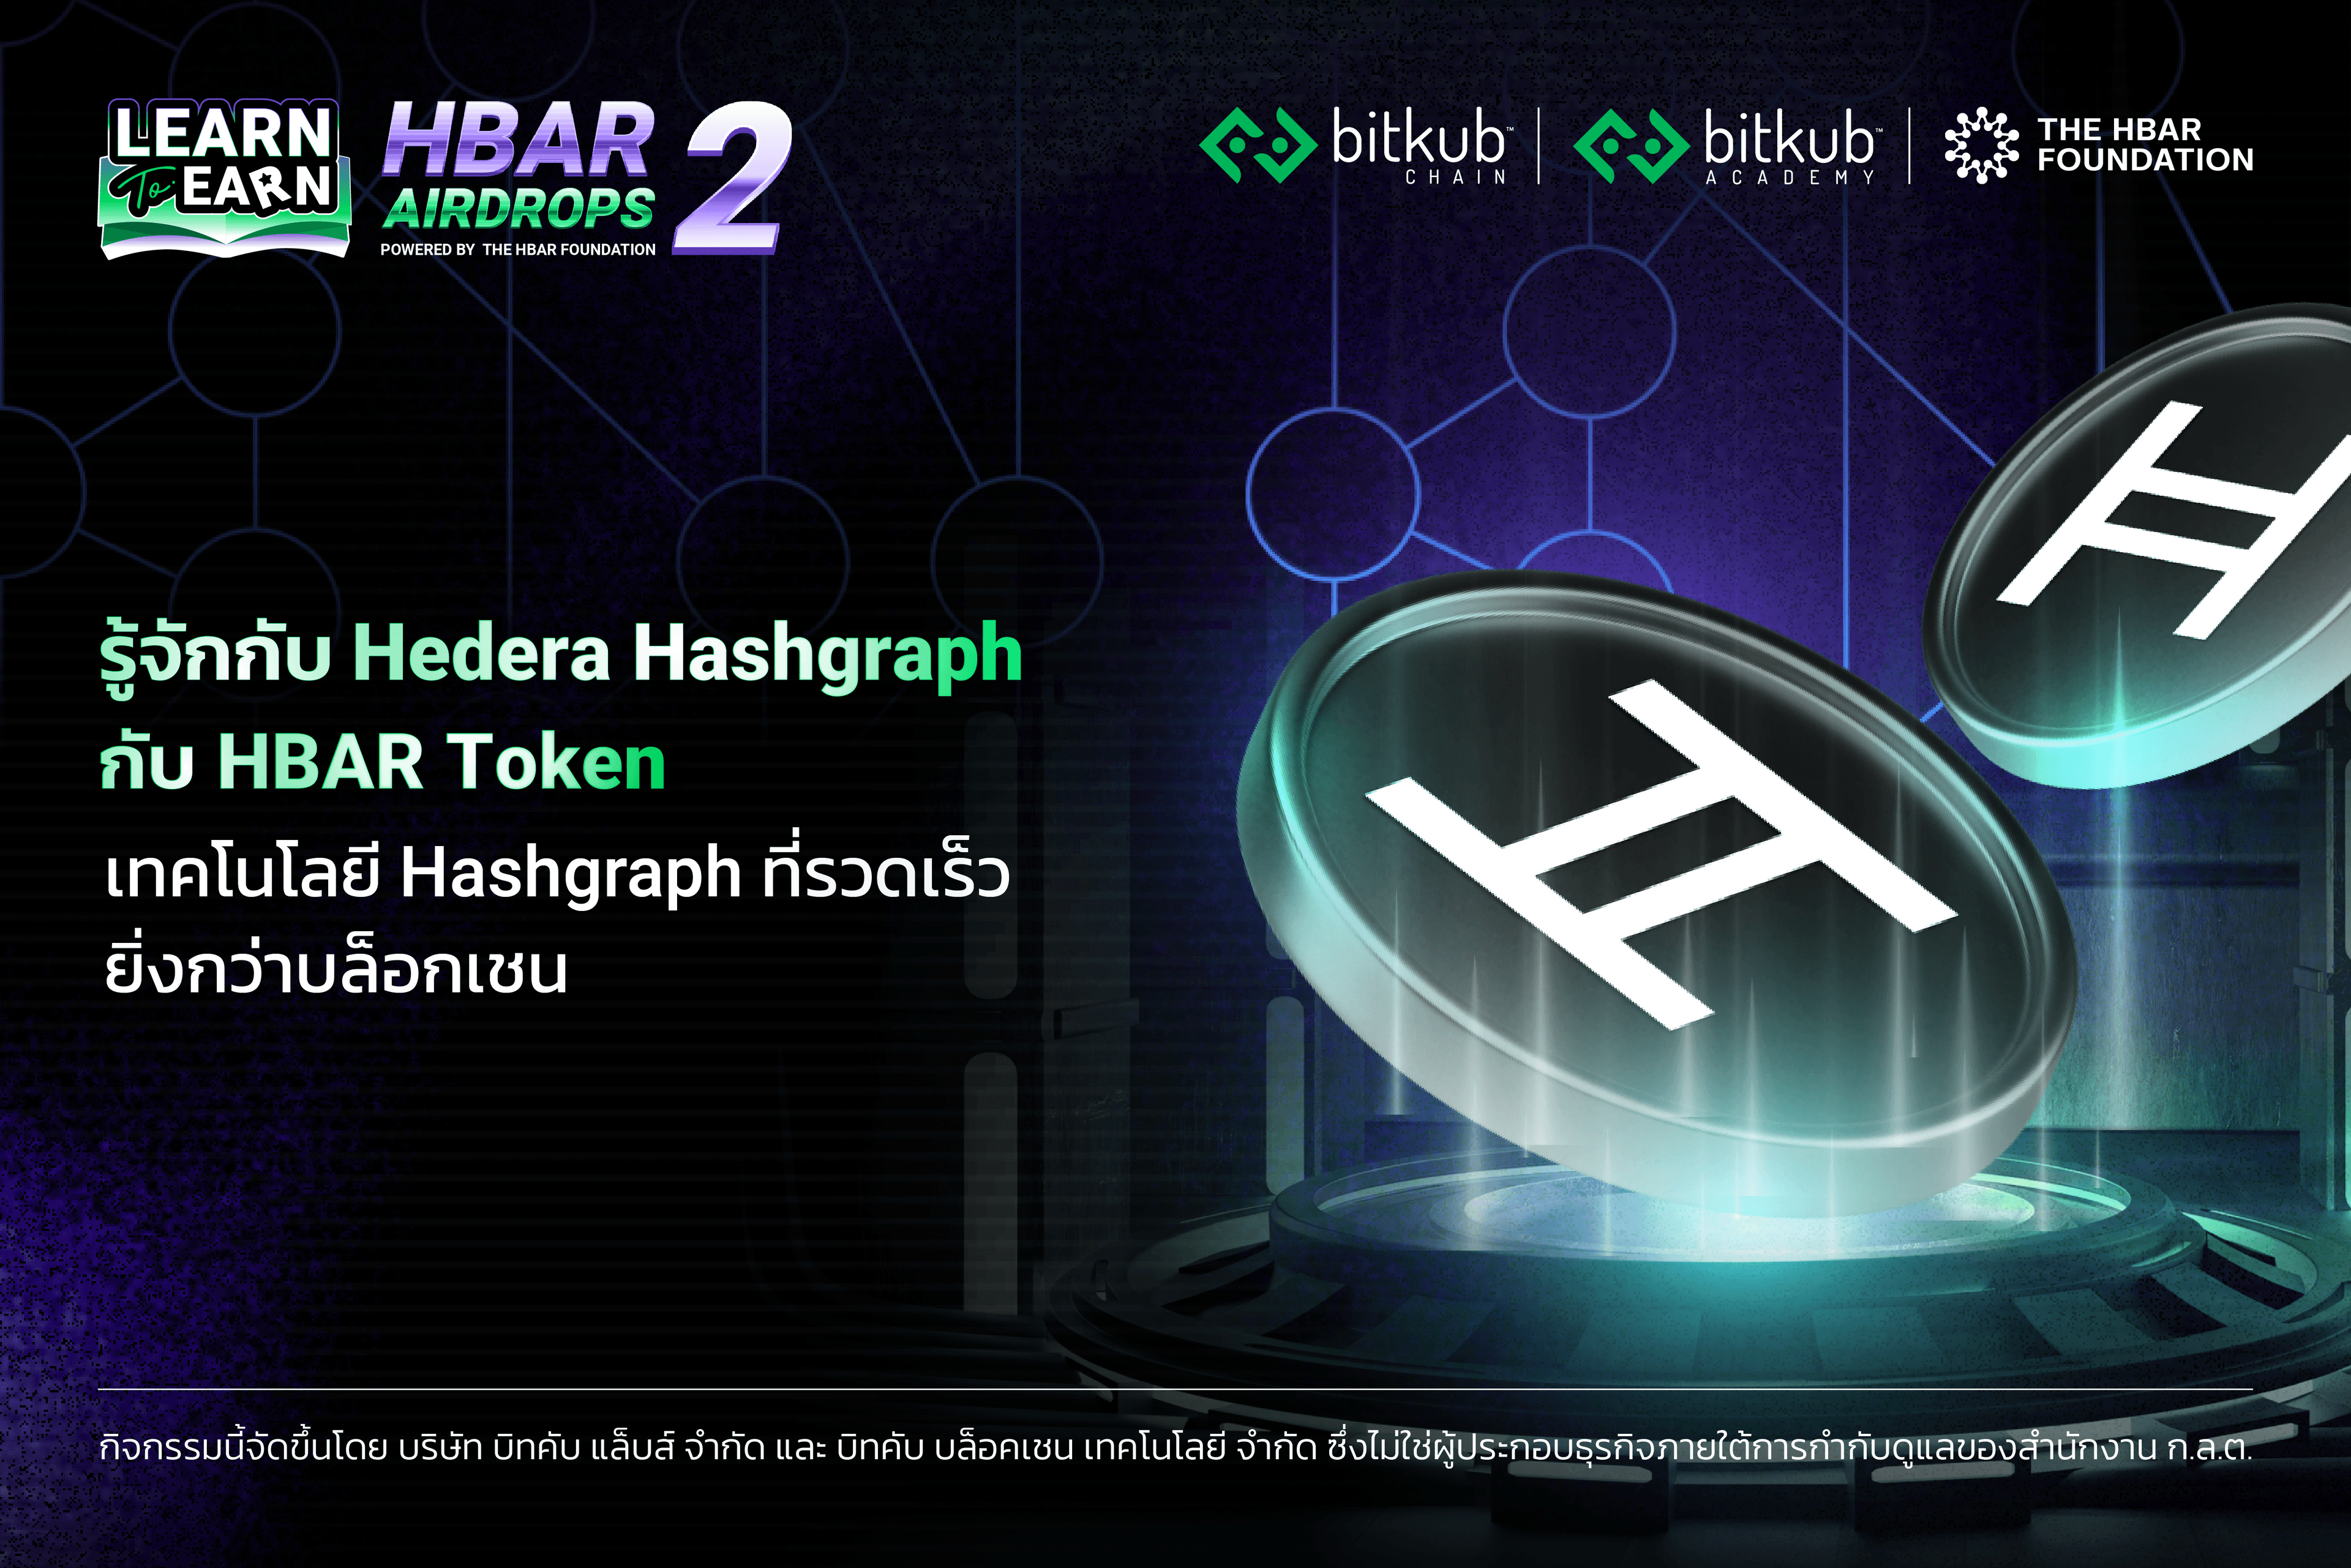 Hedera Hashgraph (HBAR) คืออะไร? เทคโนโลยีที่ไม่ใช่บล็อกเชน แต่เป็น Hashgraph ที่รวดเร็วยิ่งกว่า